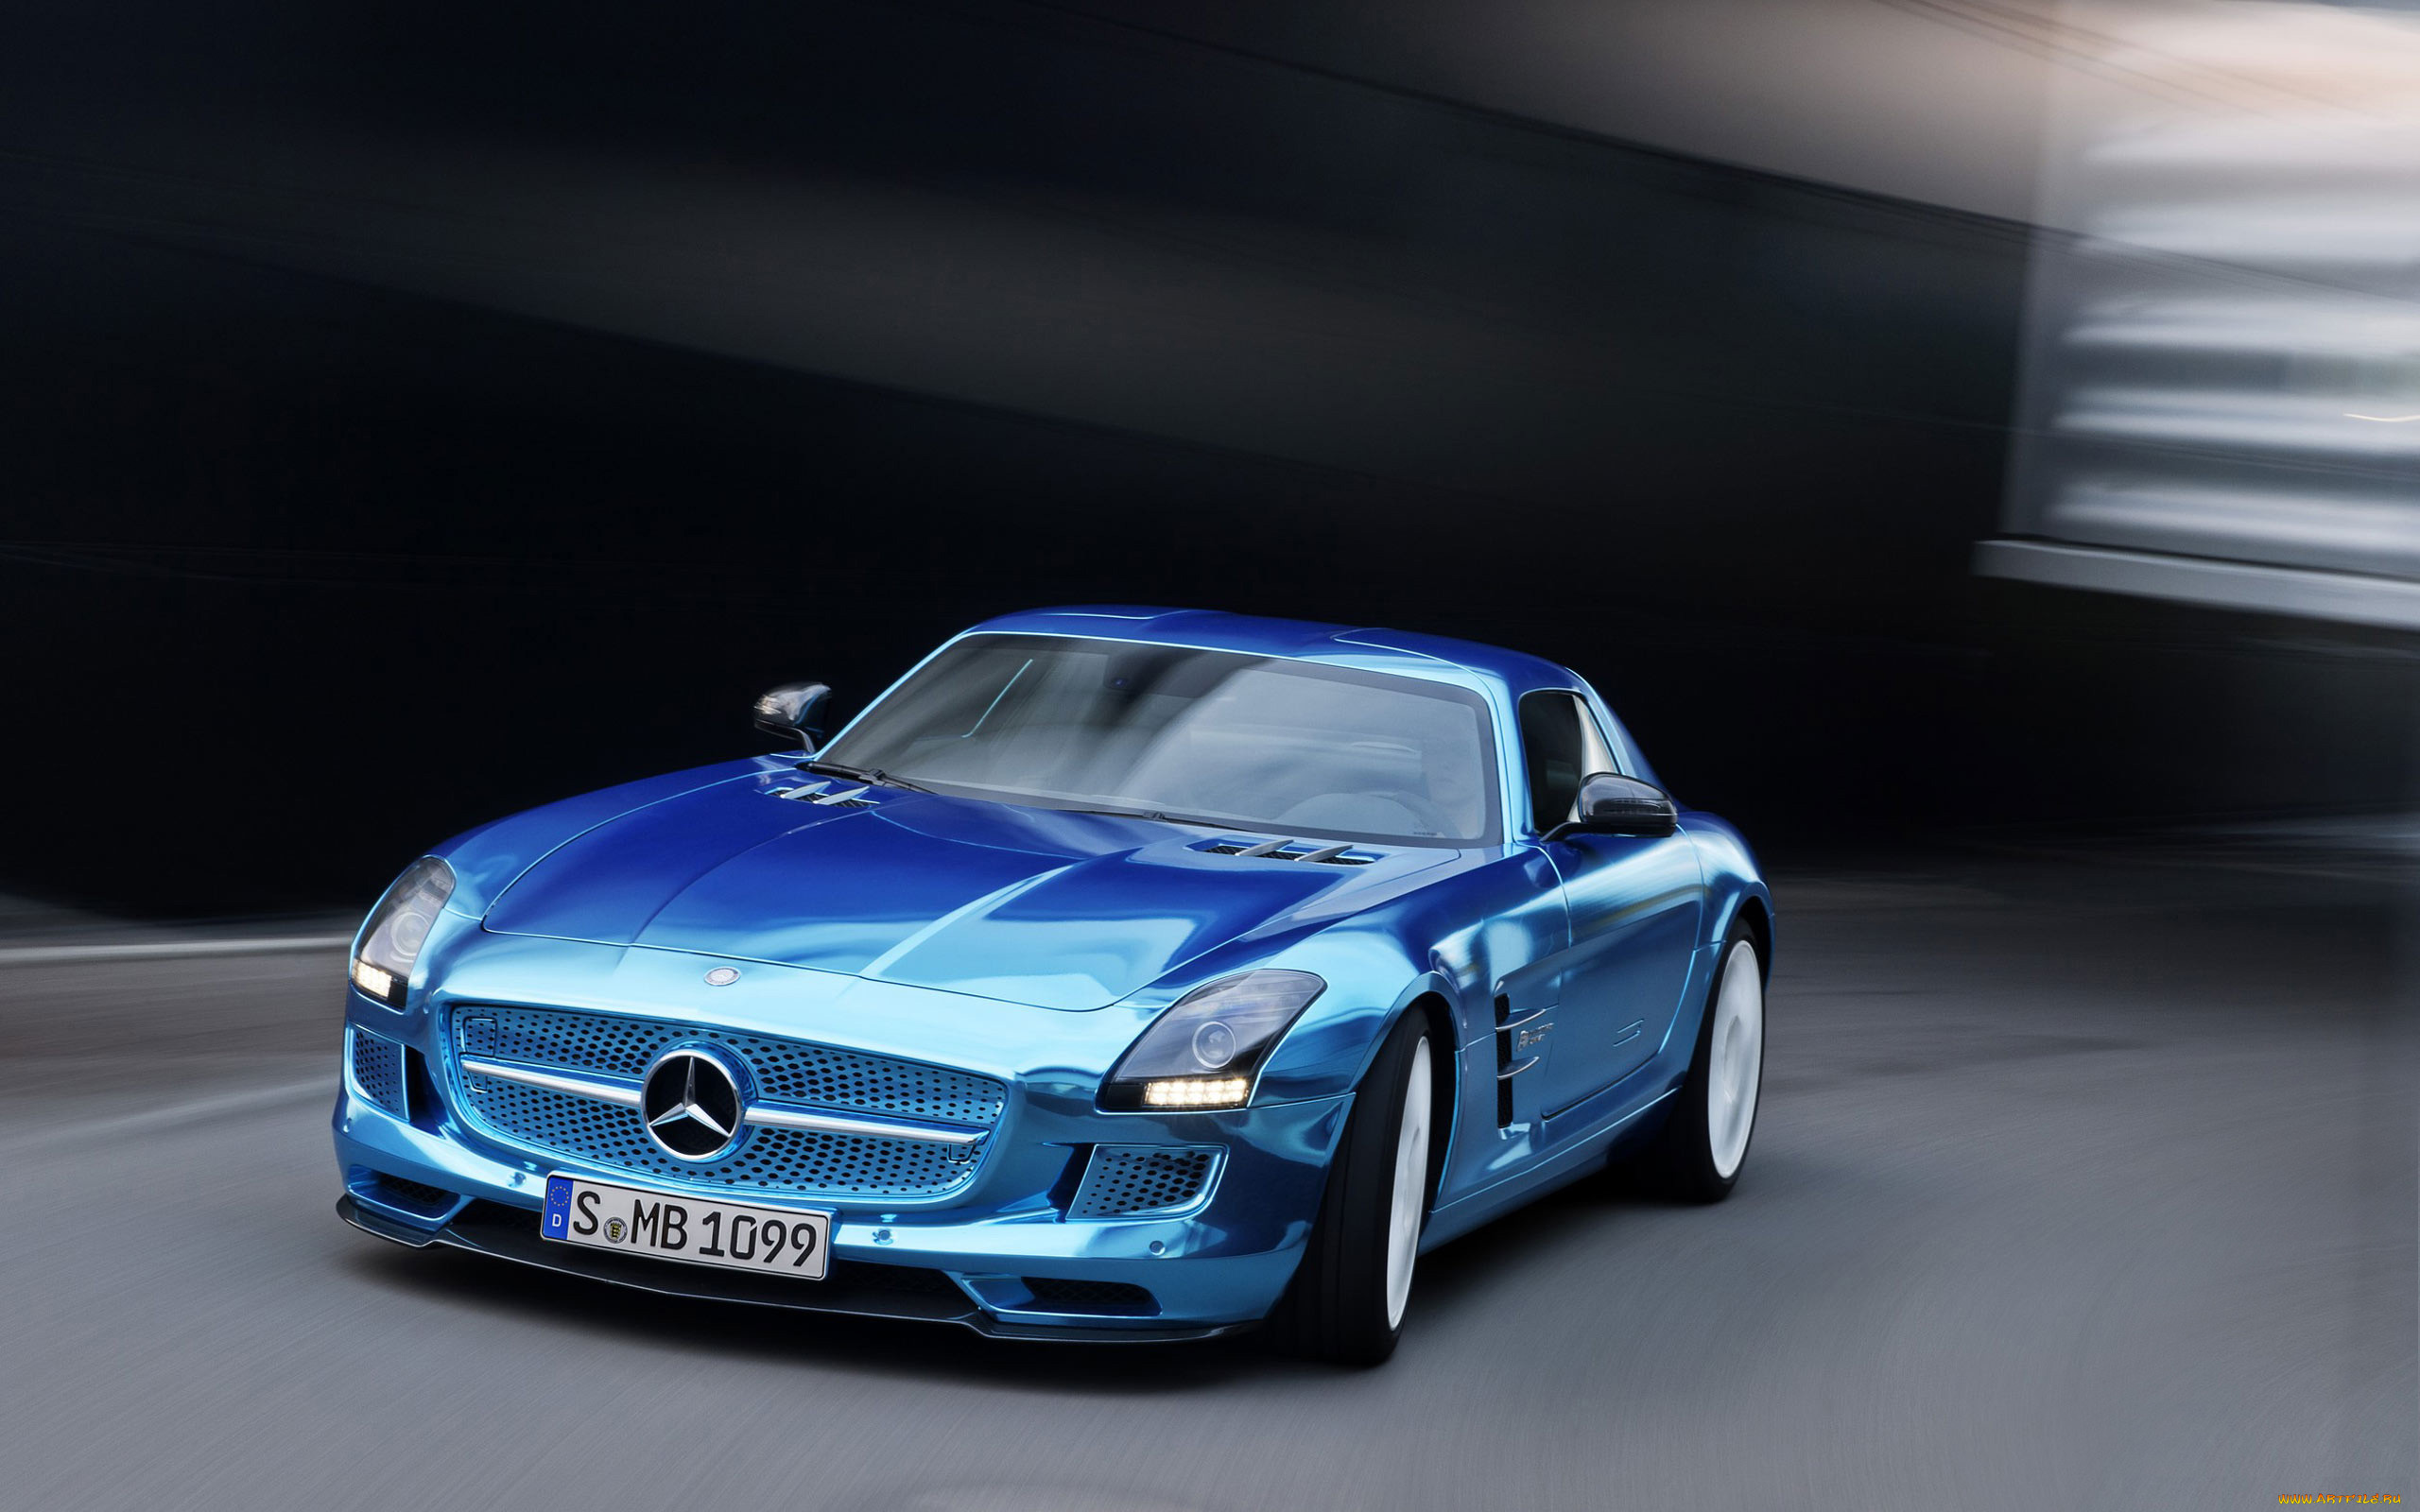 mercedes-benz sls amg coupe electric car 2014, , mercedes-benz, blue, 2014, car, electric, coupe, sls, amg